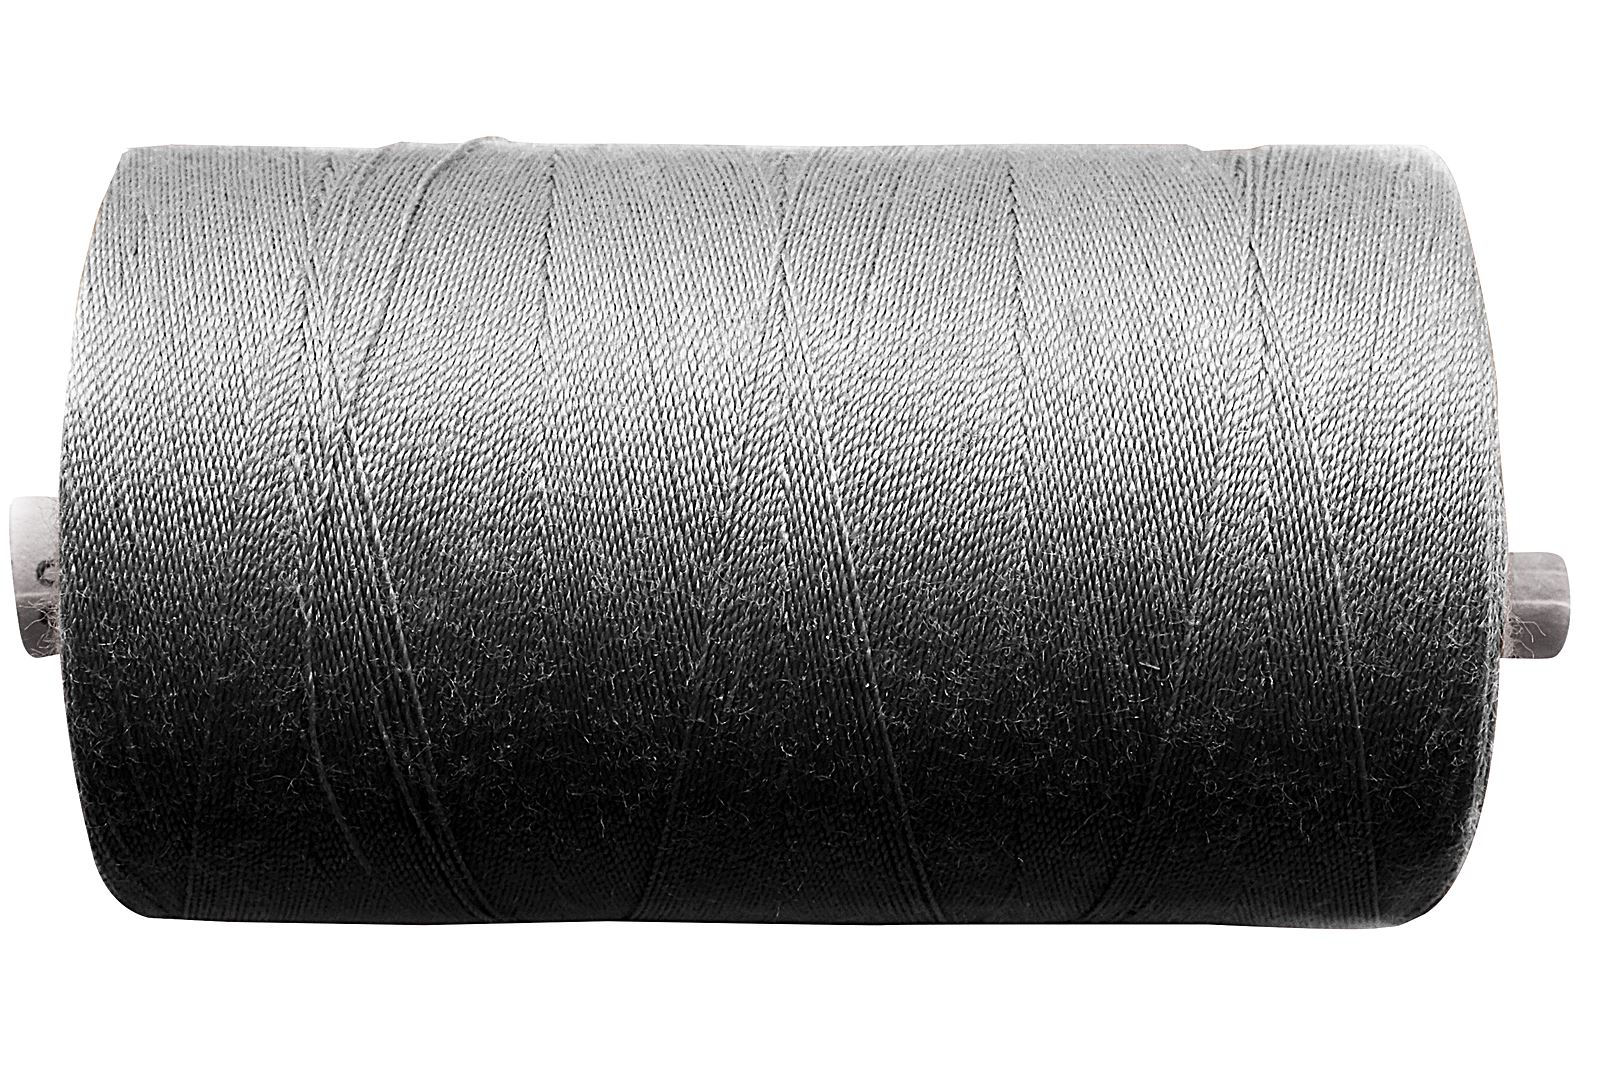 Linha de costura – Qualidade industrial 100 - Cinza claro